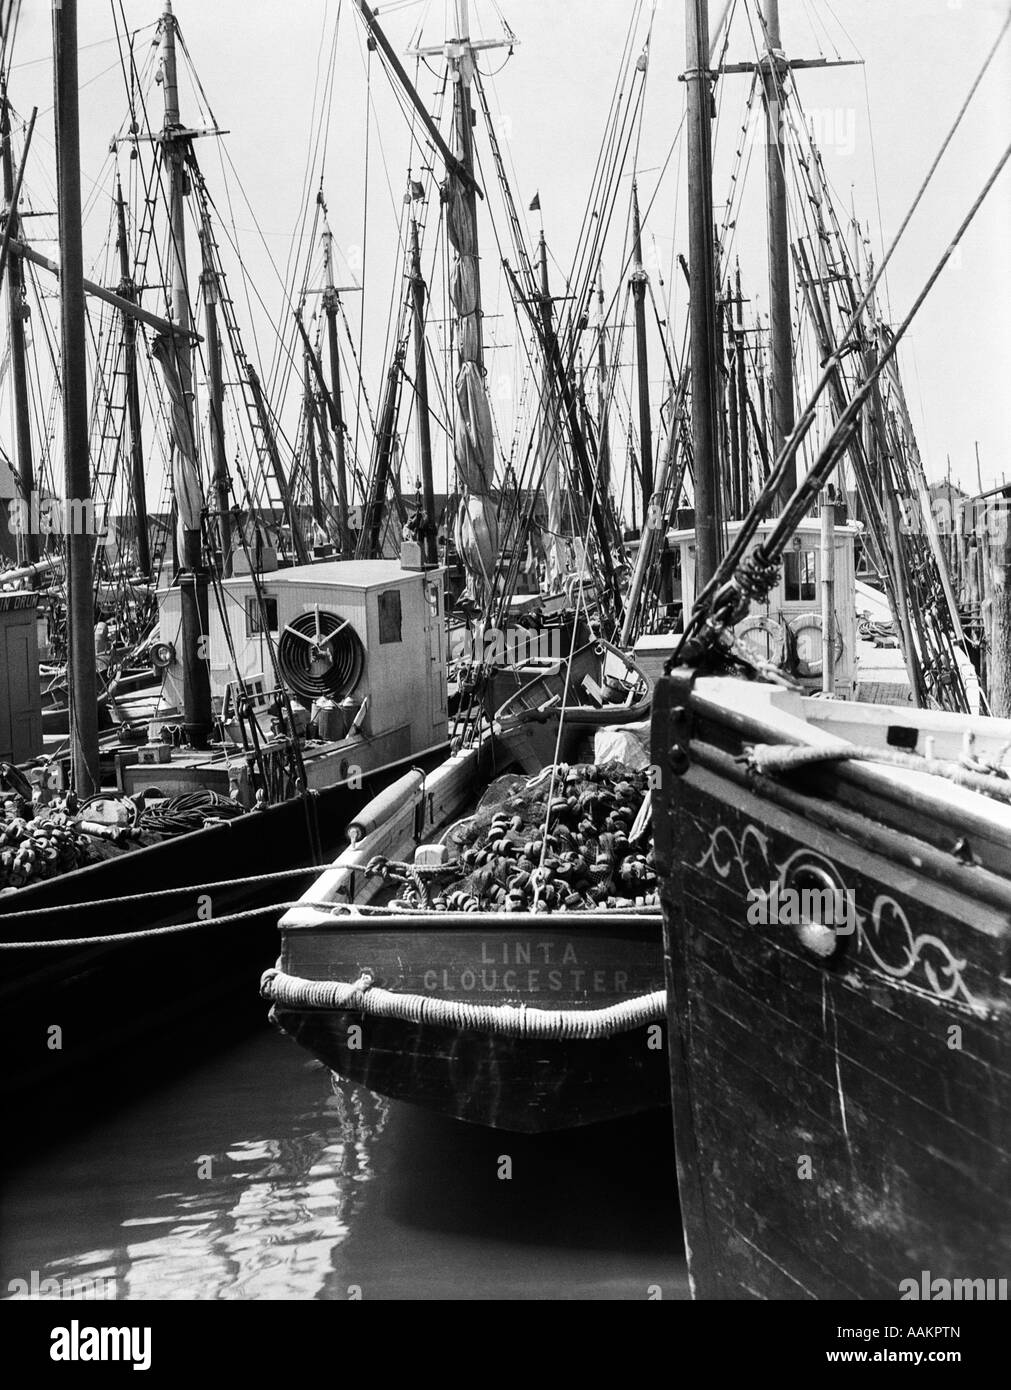 https://c8.alamy.com/comp/AAKPTN/1920s-1930s-commercial-fishing-shipping-ships-boat-boating-boats-sail-AAKPTN.jpg